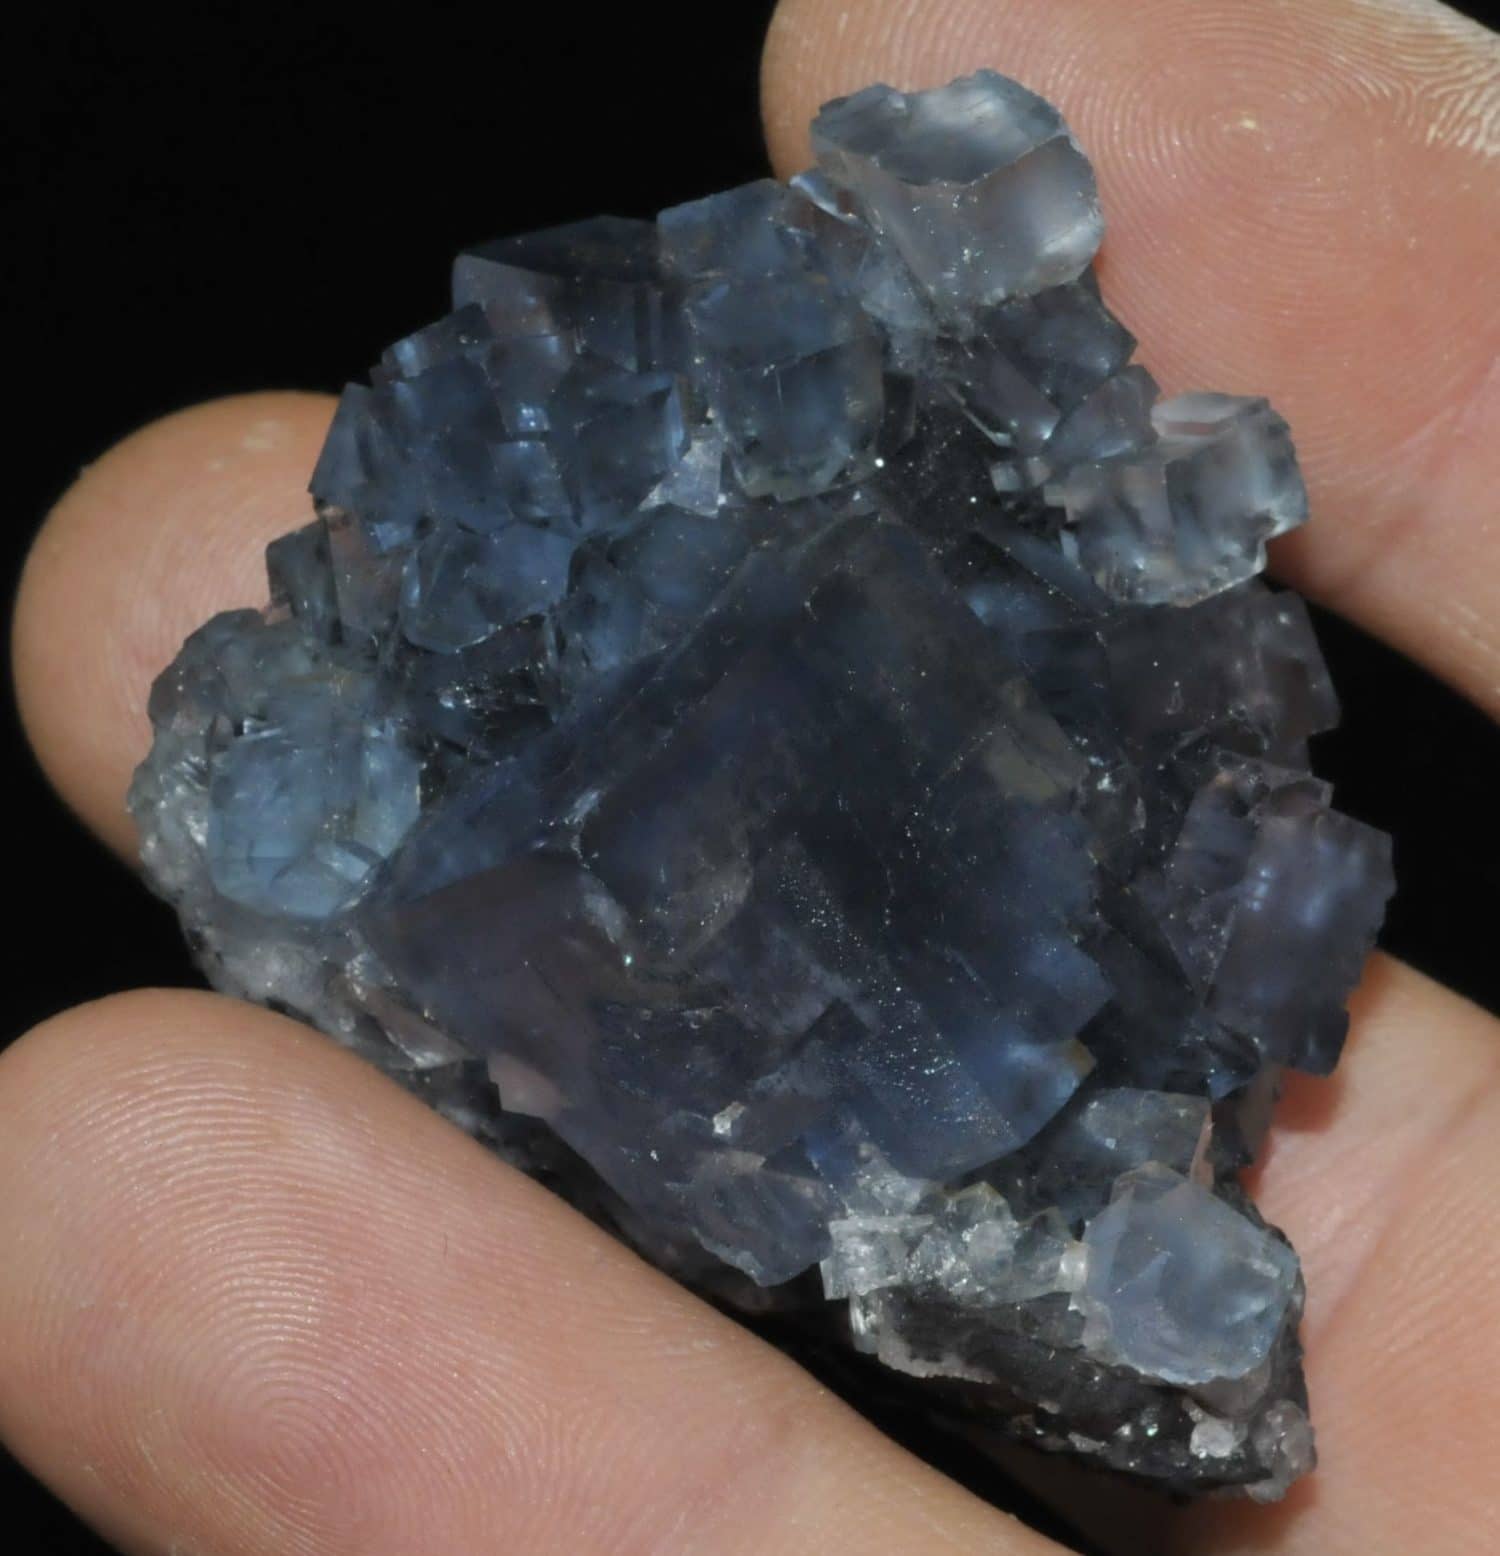 Fluorite bleue de la mine de Montroc (Tarn).